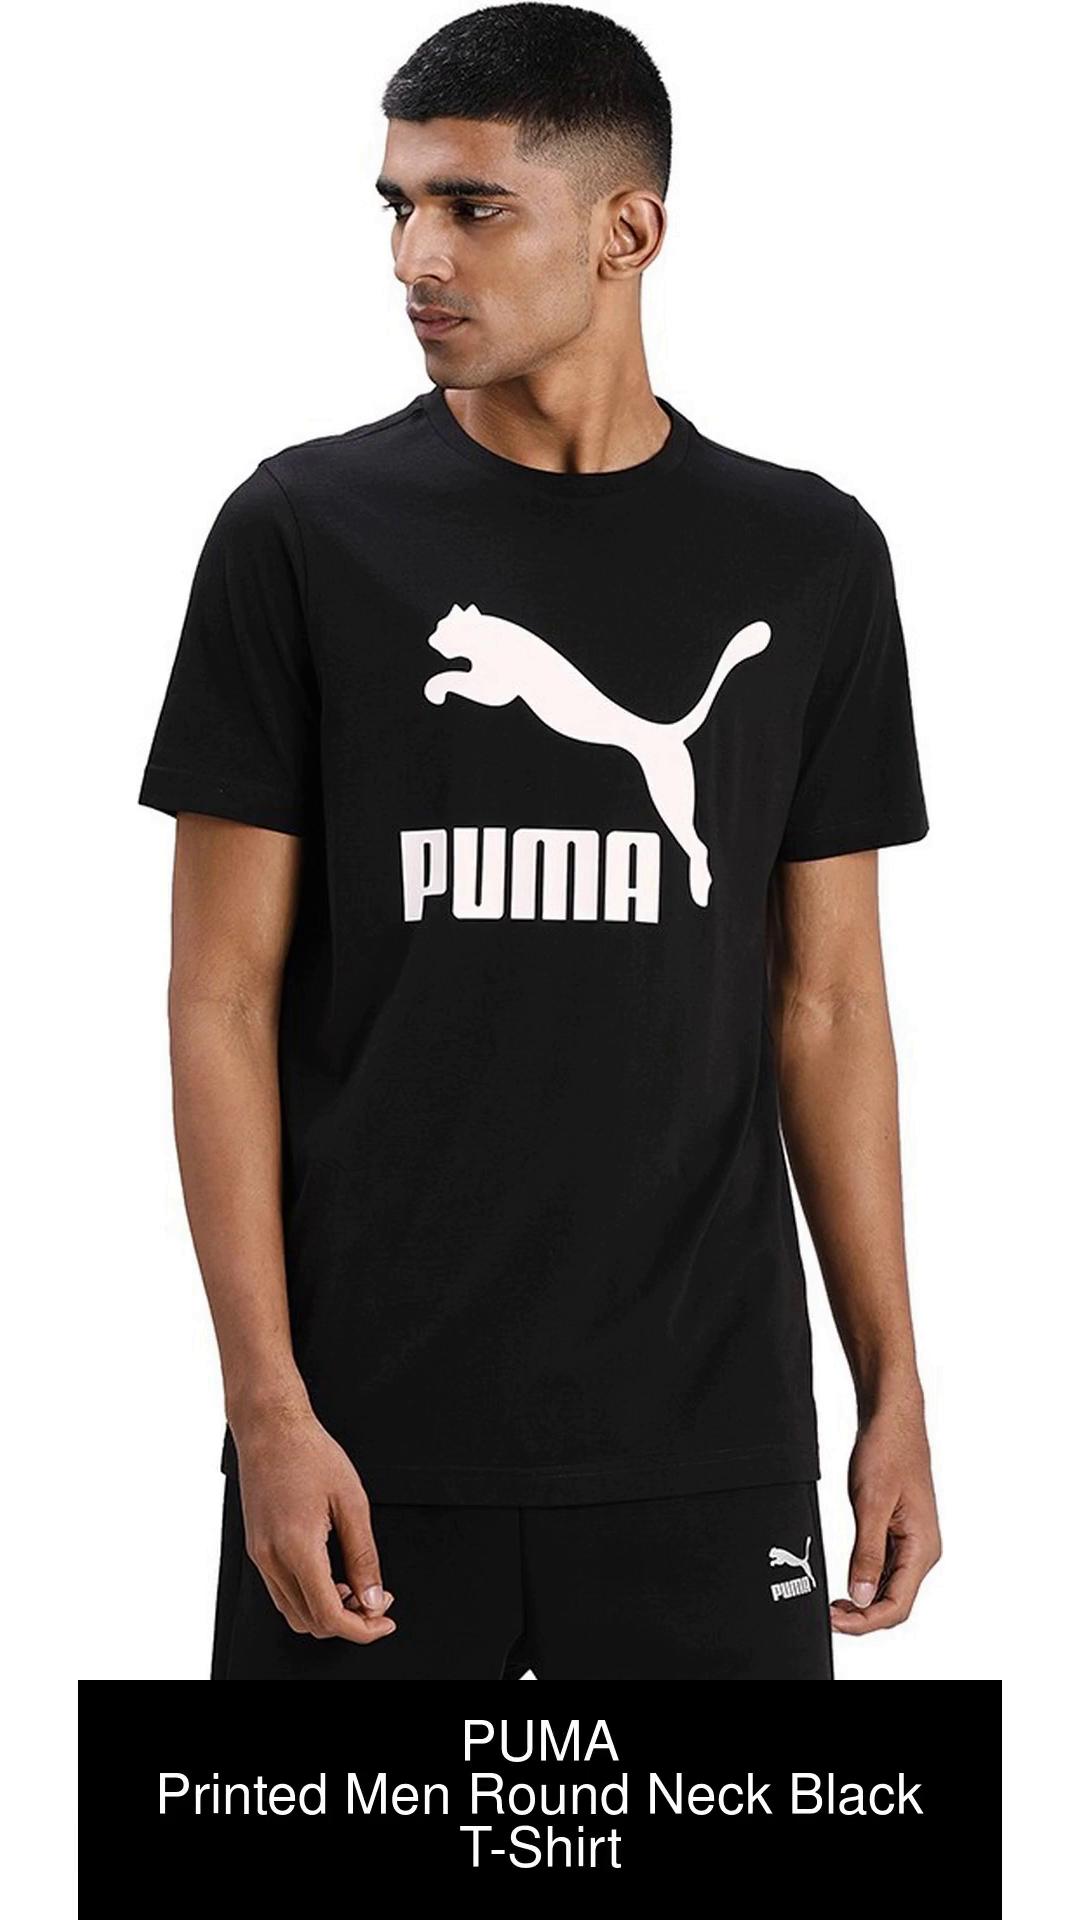 Prices Solid in PUMA Men Buy Neck Online Black at Round Men Solid Best PUMA Round India T-Shirt - Black Neck T-Shirt